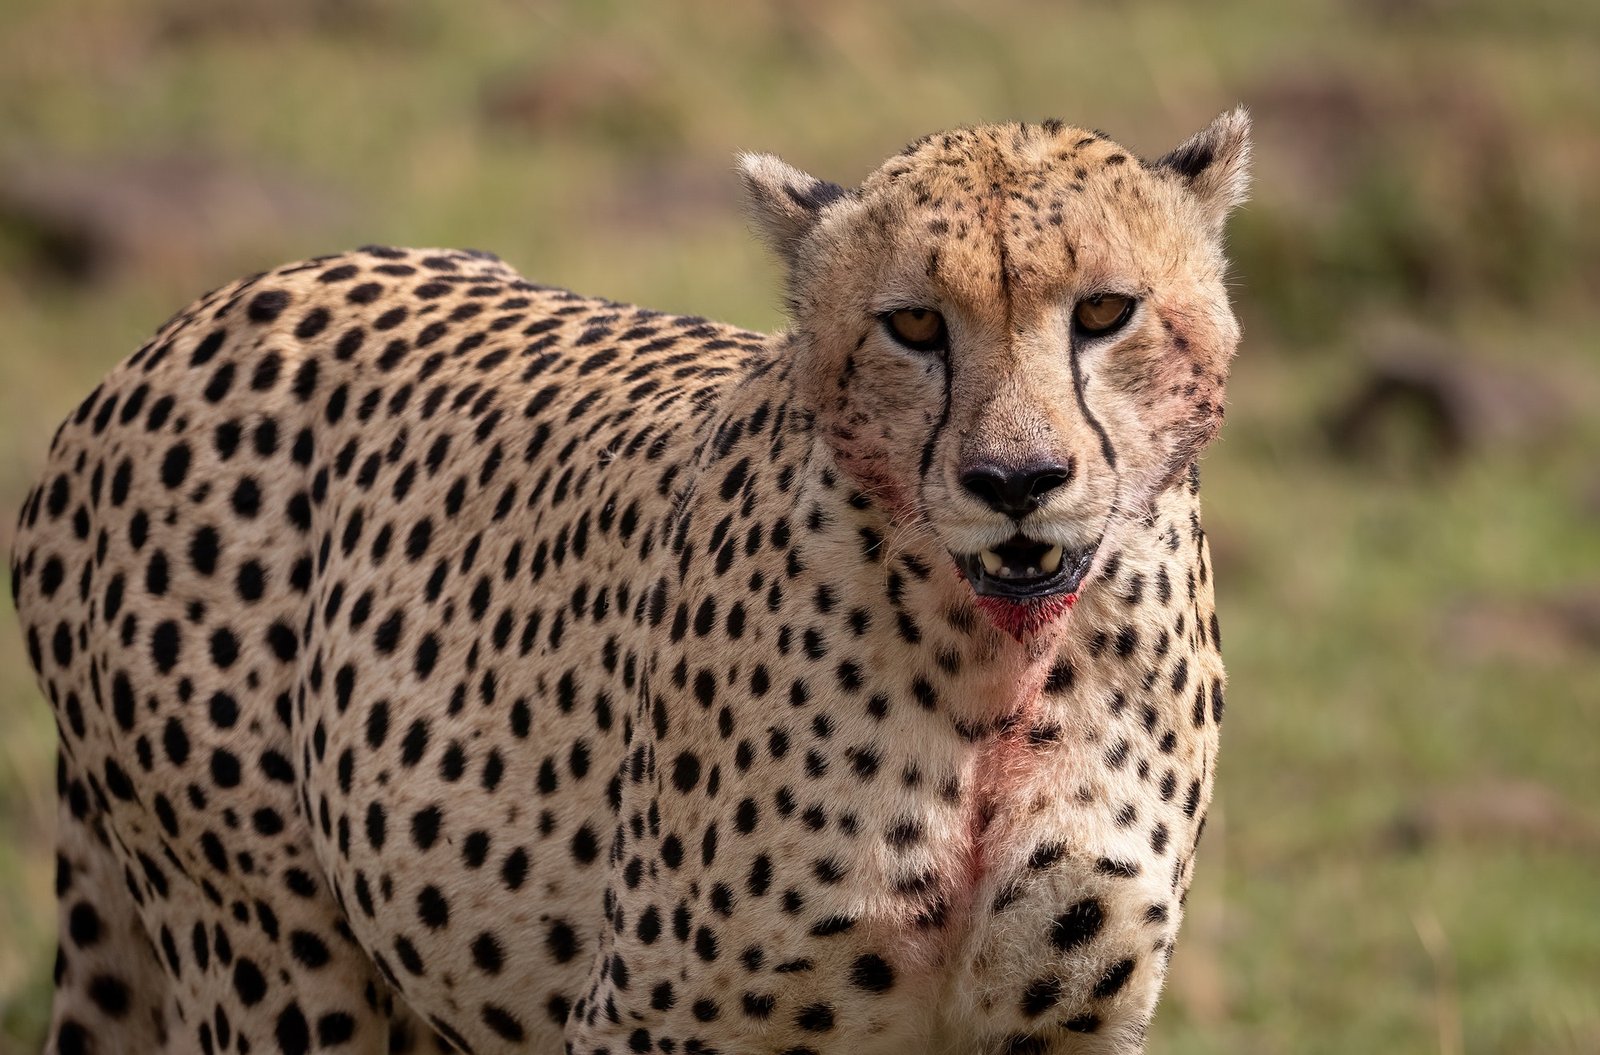 Cheetah in the Mara, Africa